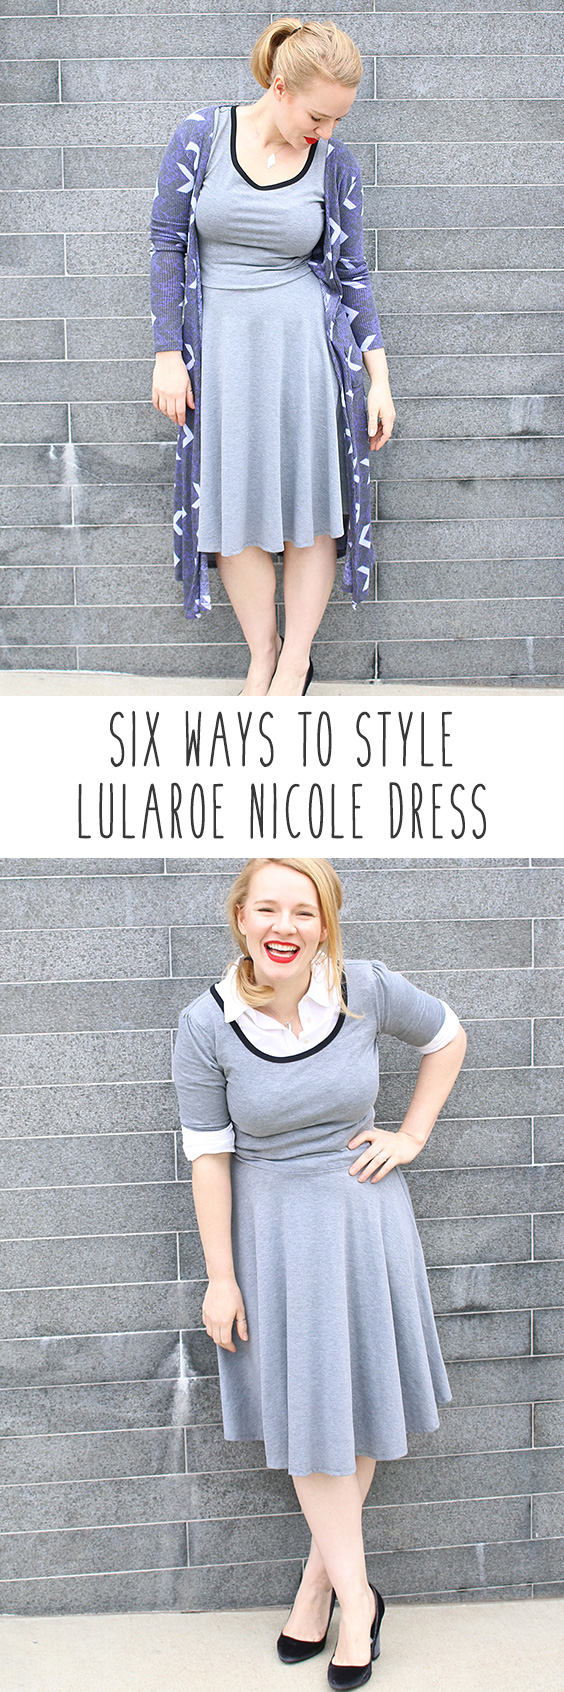 LuLaRoe Nicole Dress (Sz Medium) New with Tags: Mutli-color